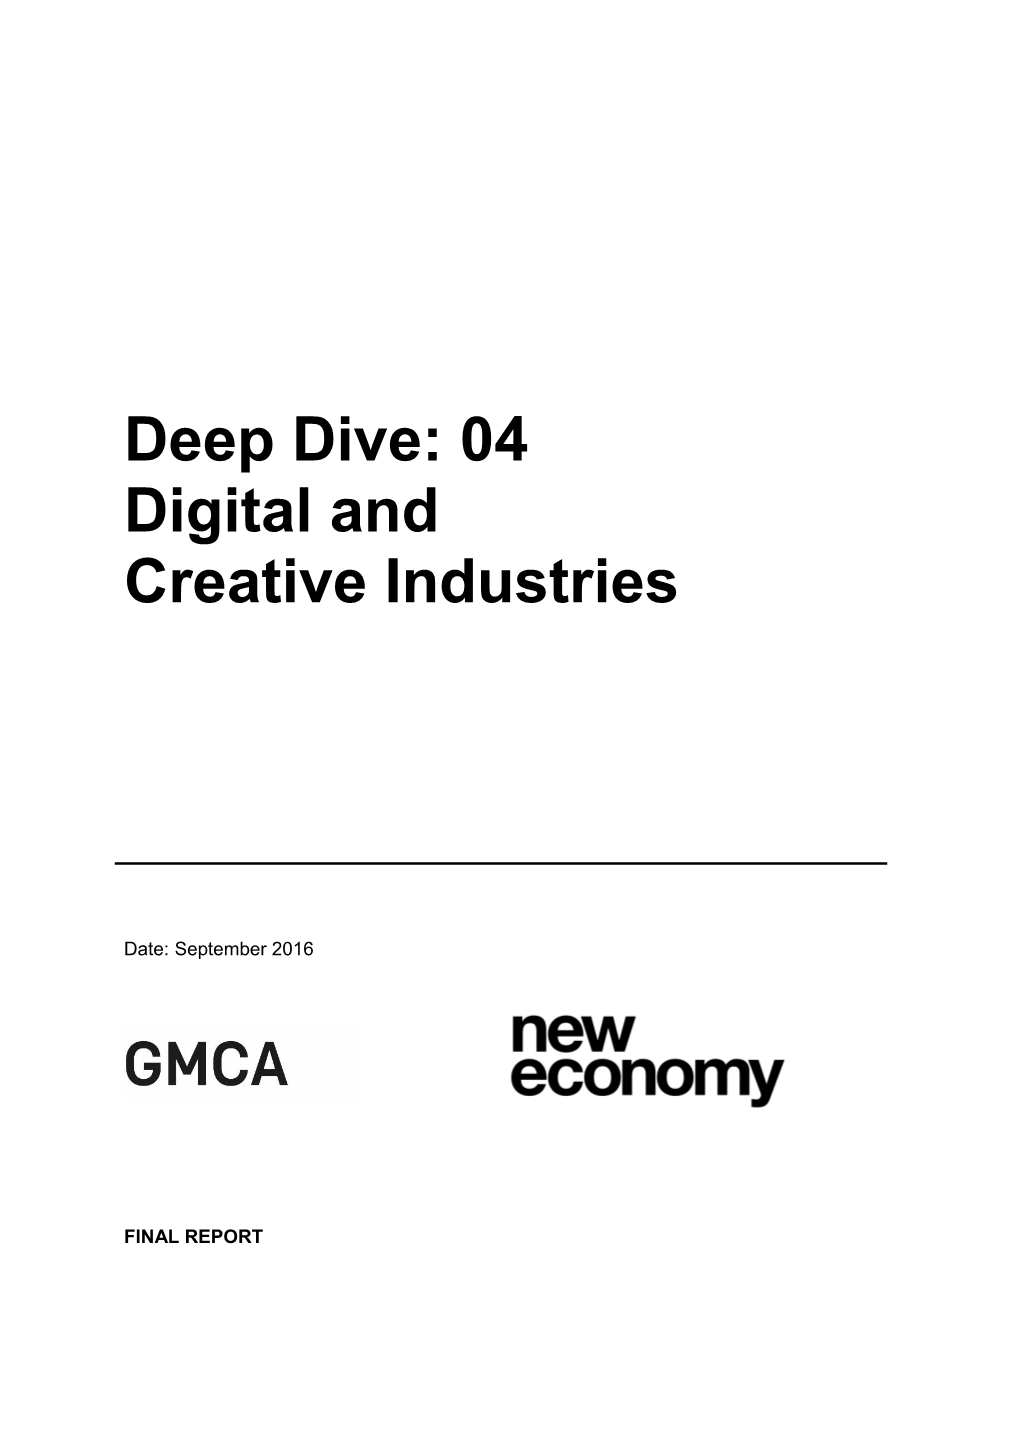 Deep Dive: 04 Digital and Creative Industries